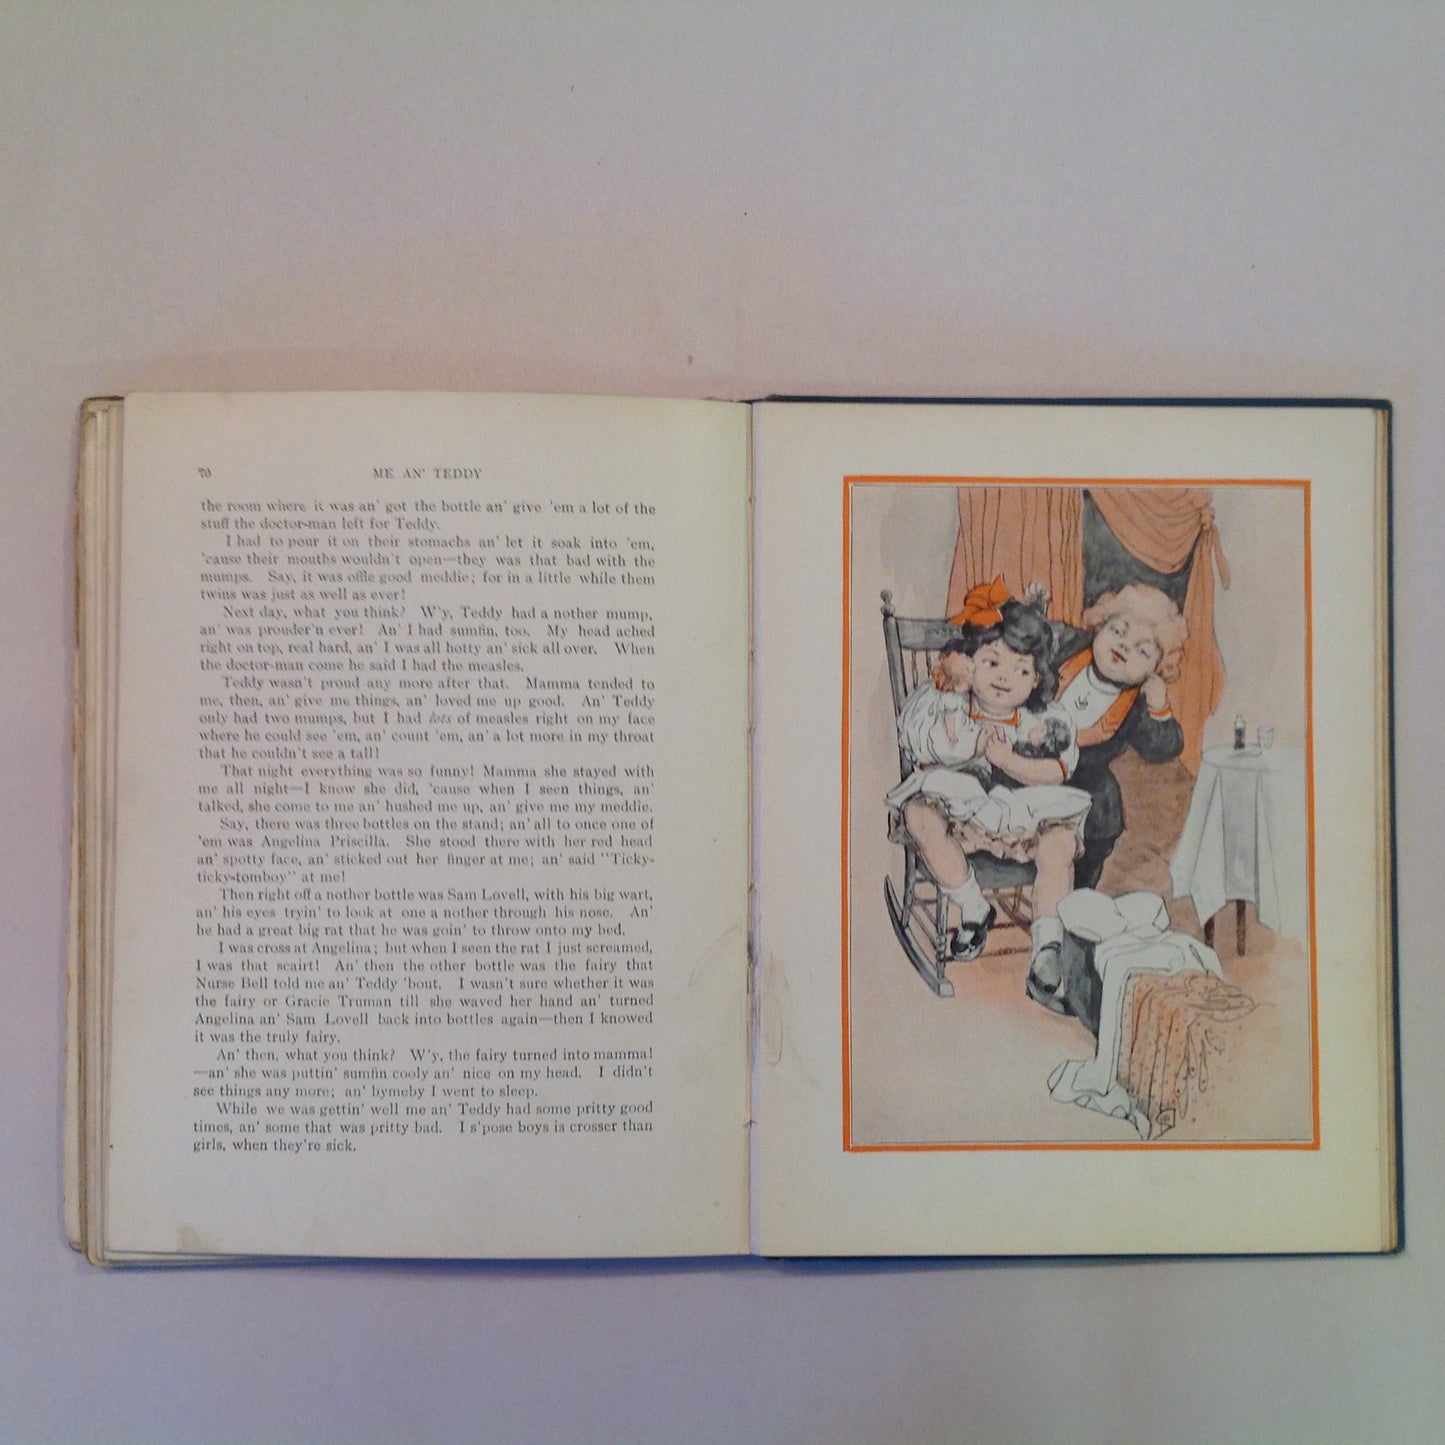 Antique 1906 Children's Hardcover Me An' Teddy LeRoy Hooker Will Garqueville First Edition